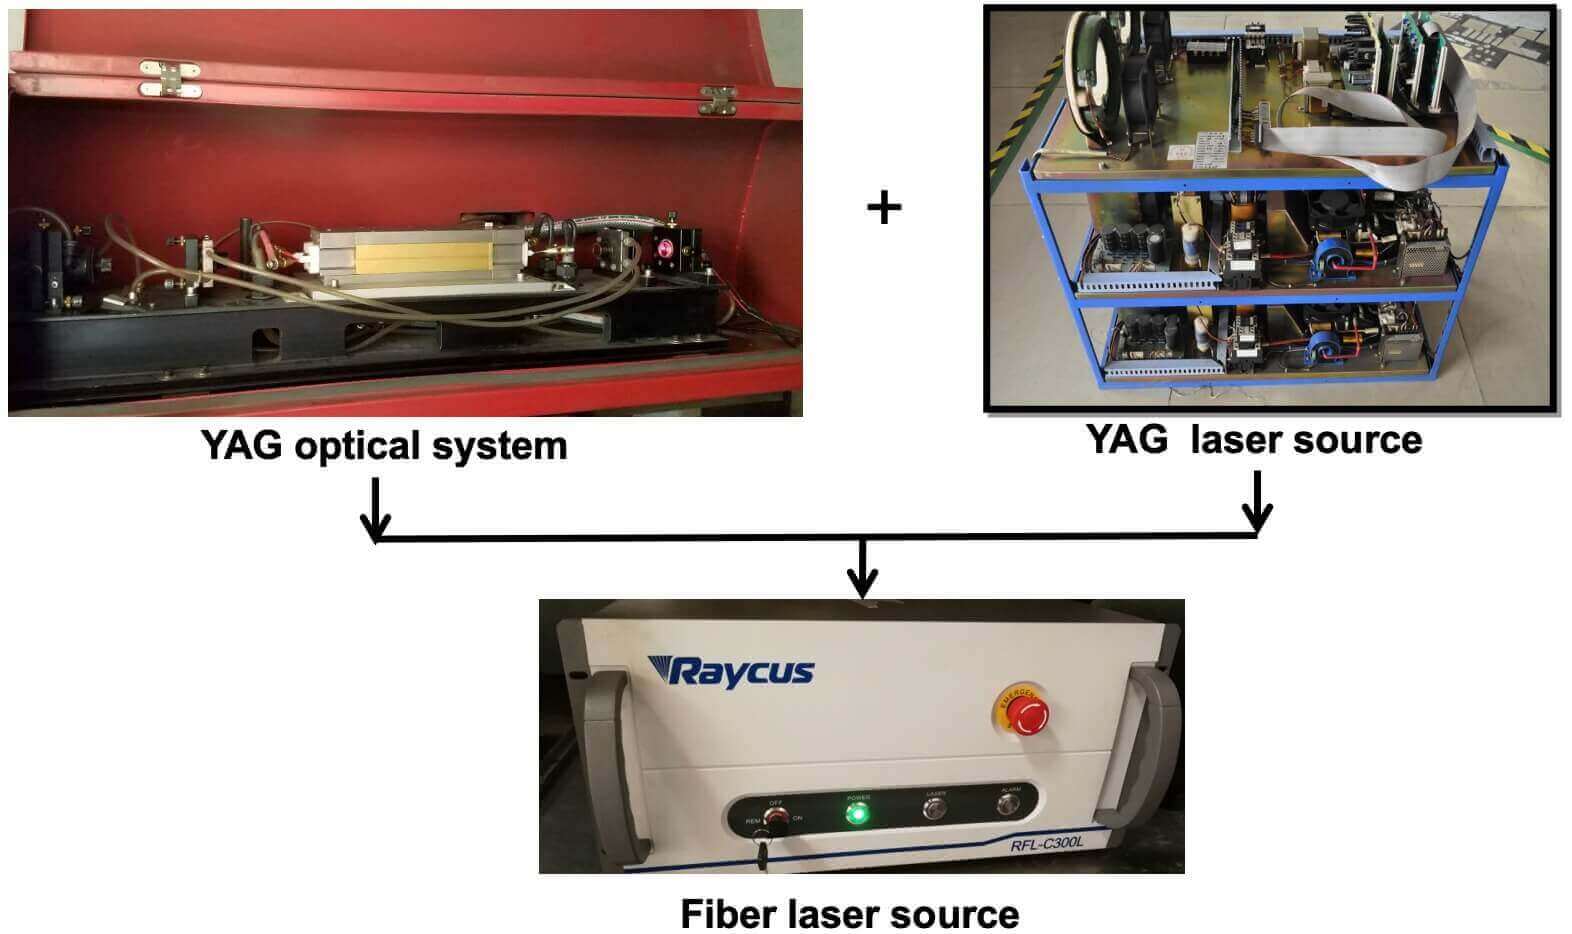 Sky Fire LaserRetrofit YAG Laser into Fiber LaserUpgrade Your Machinery with YAG to Fiber Laser Retrofit